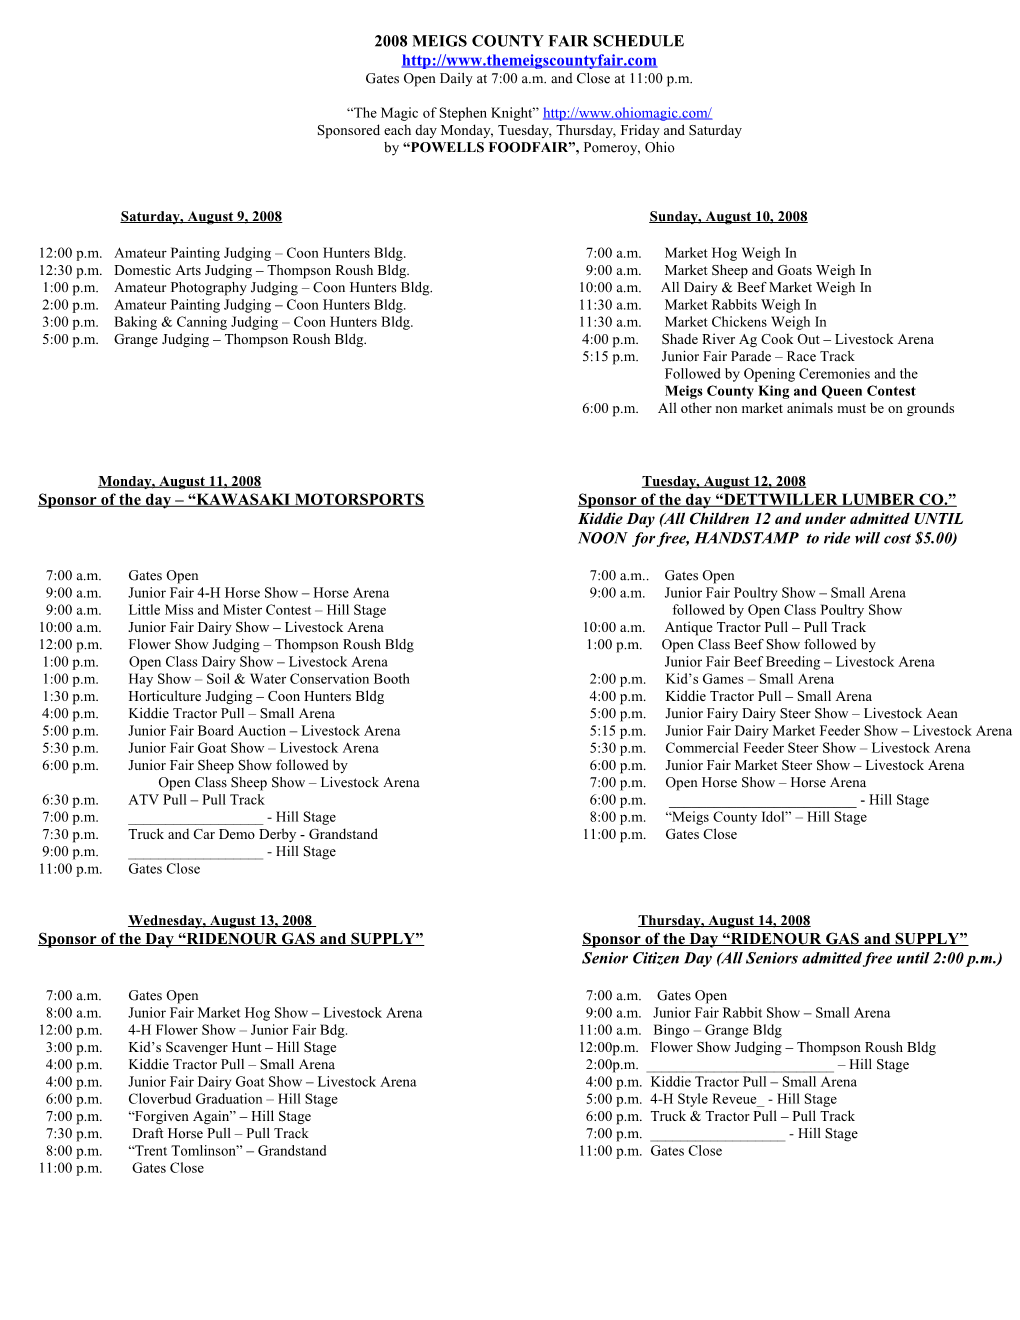 2002 Meigs County Fair Schedule